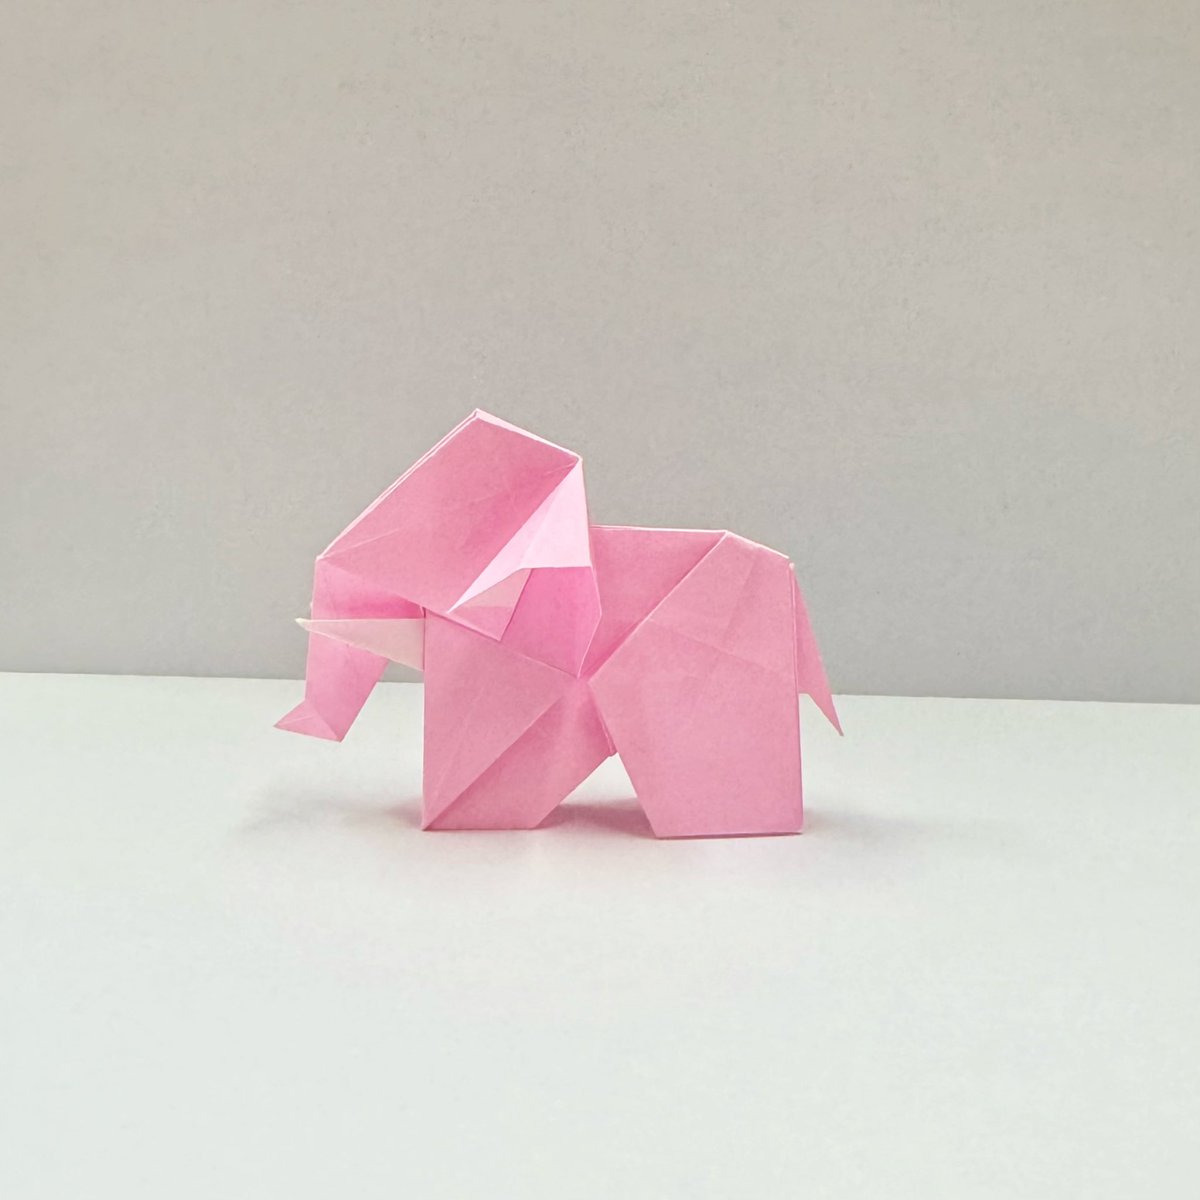 #origami 
Elephant
Designer&📂：me